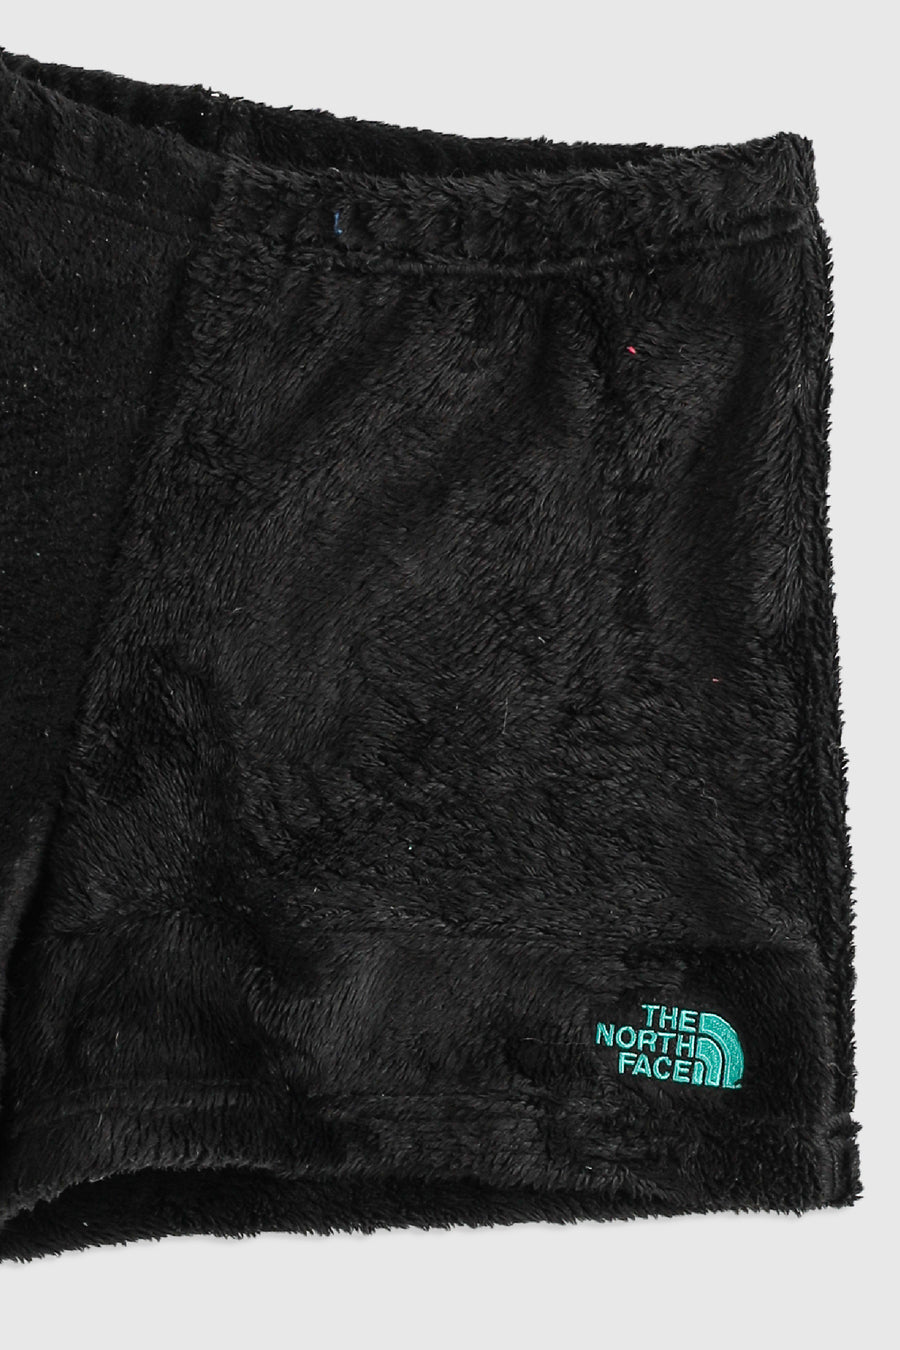 Rework North Face Fuzzy Shorts - M